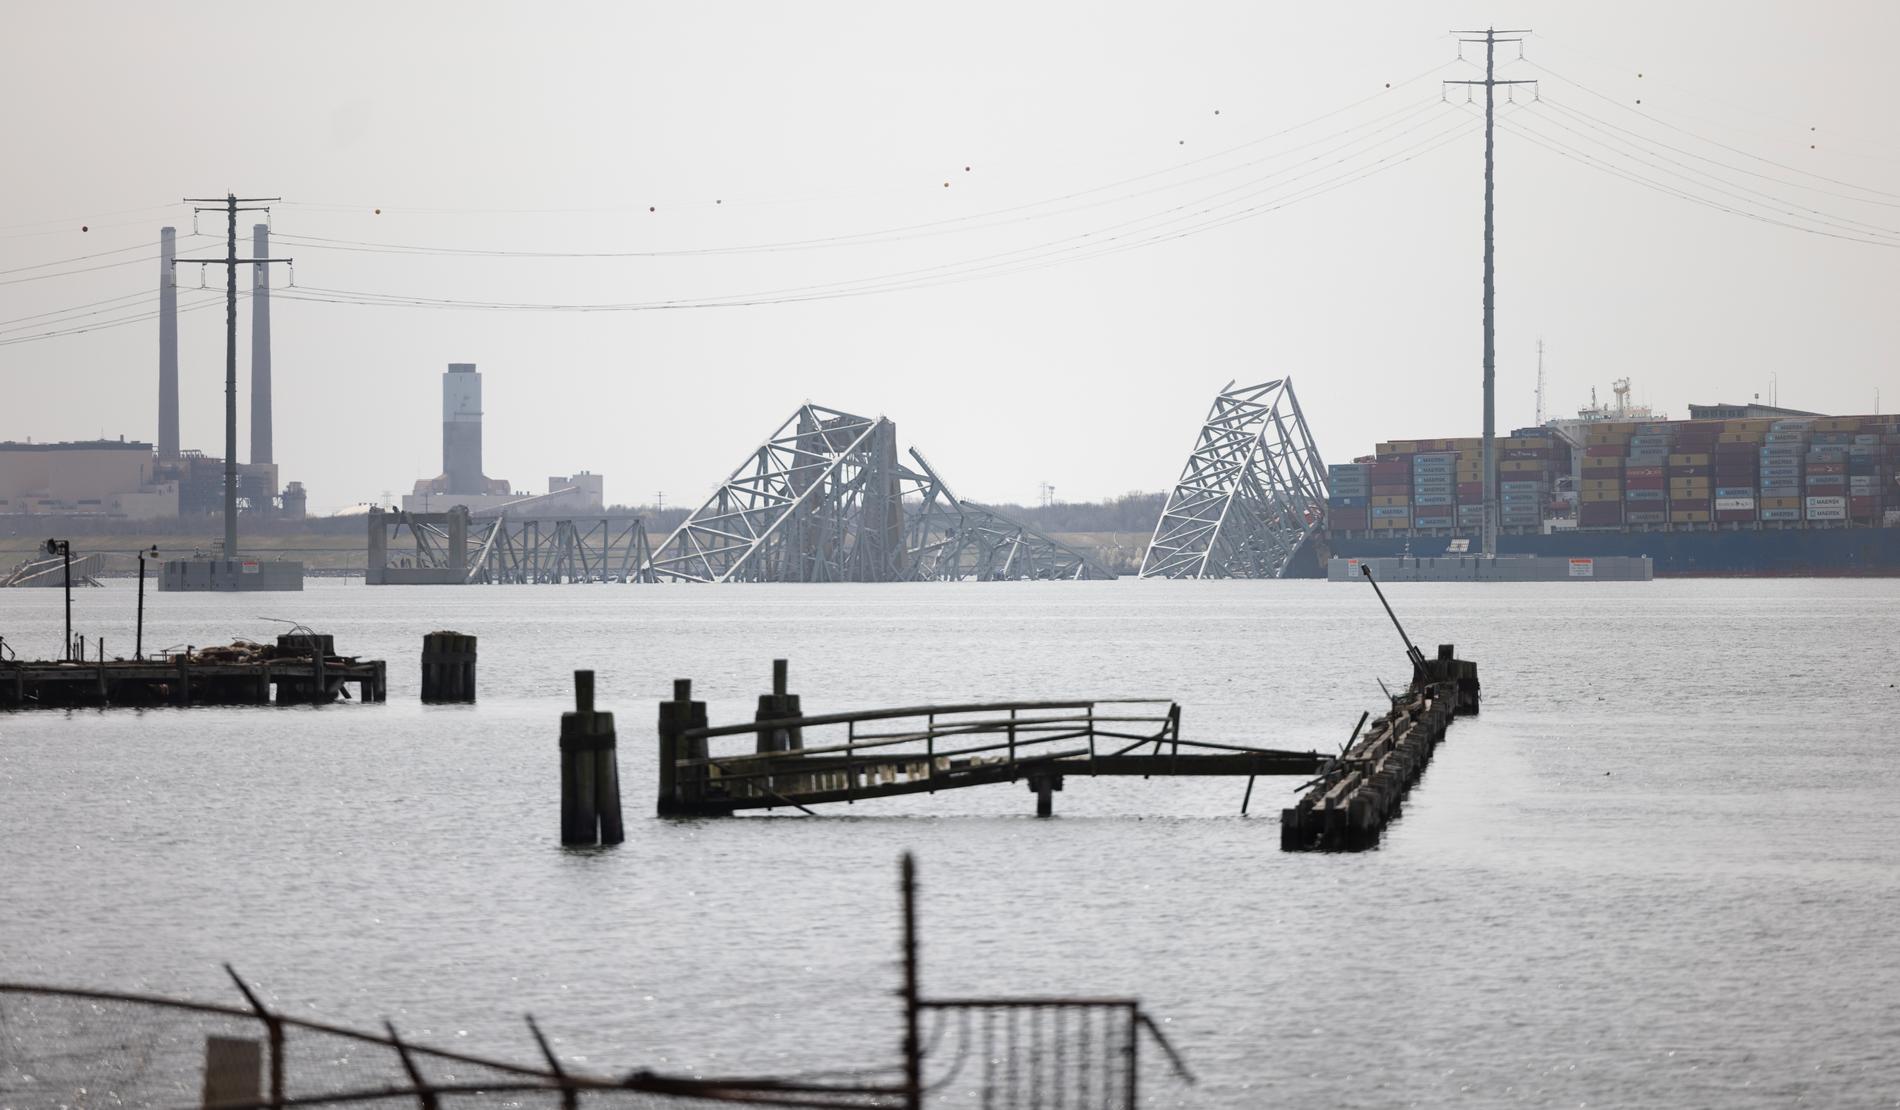 Boende i Baltimore kan se den kollapsade bron från sina hem.